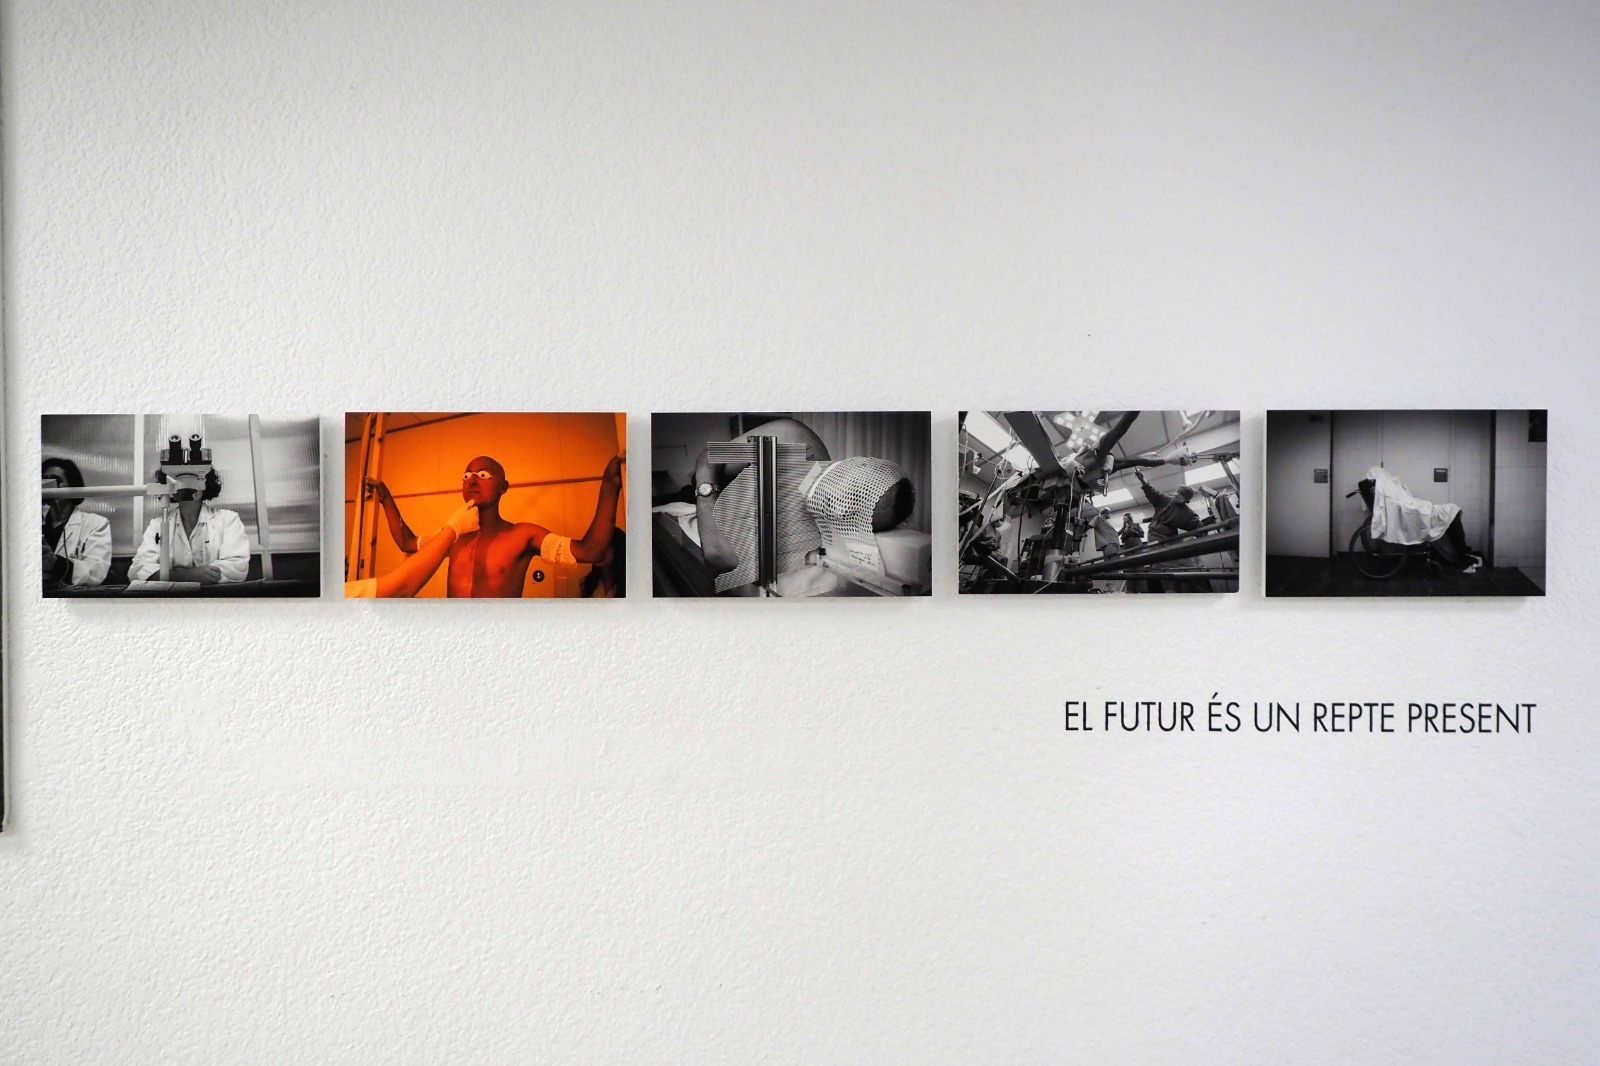 Tino Soriano et la photographie de santé de "CURART" sont exposés à l'hôpital Josep Trueta